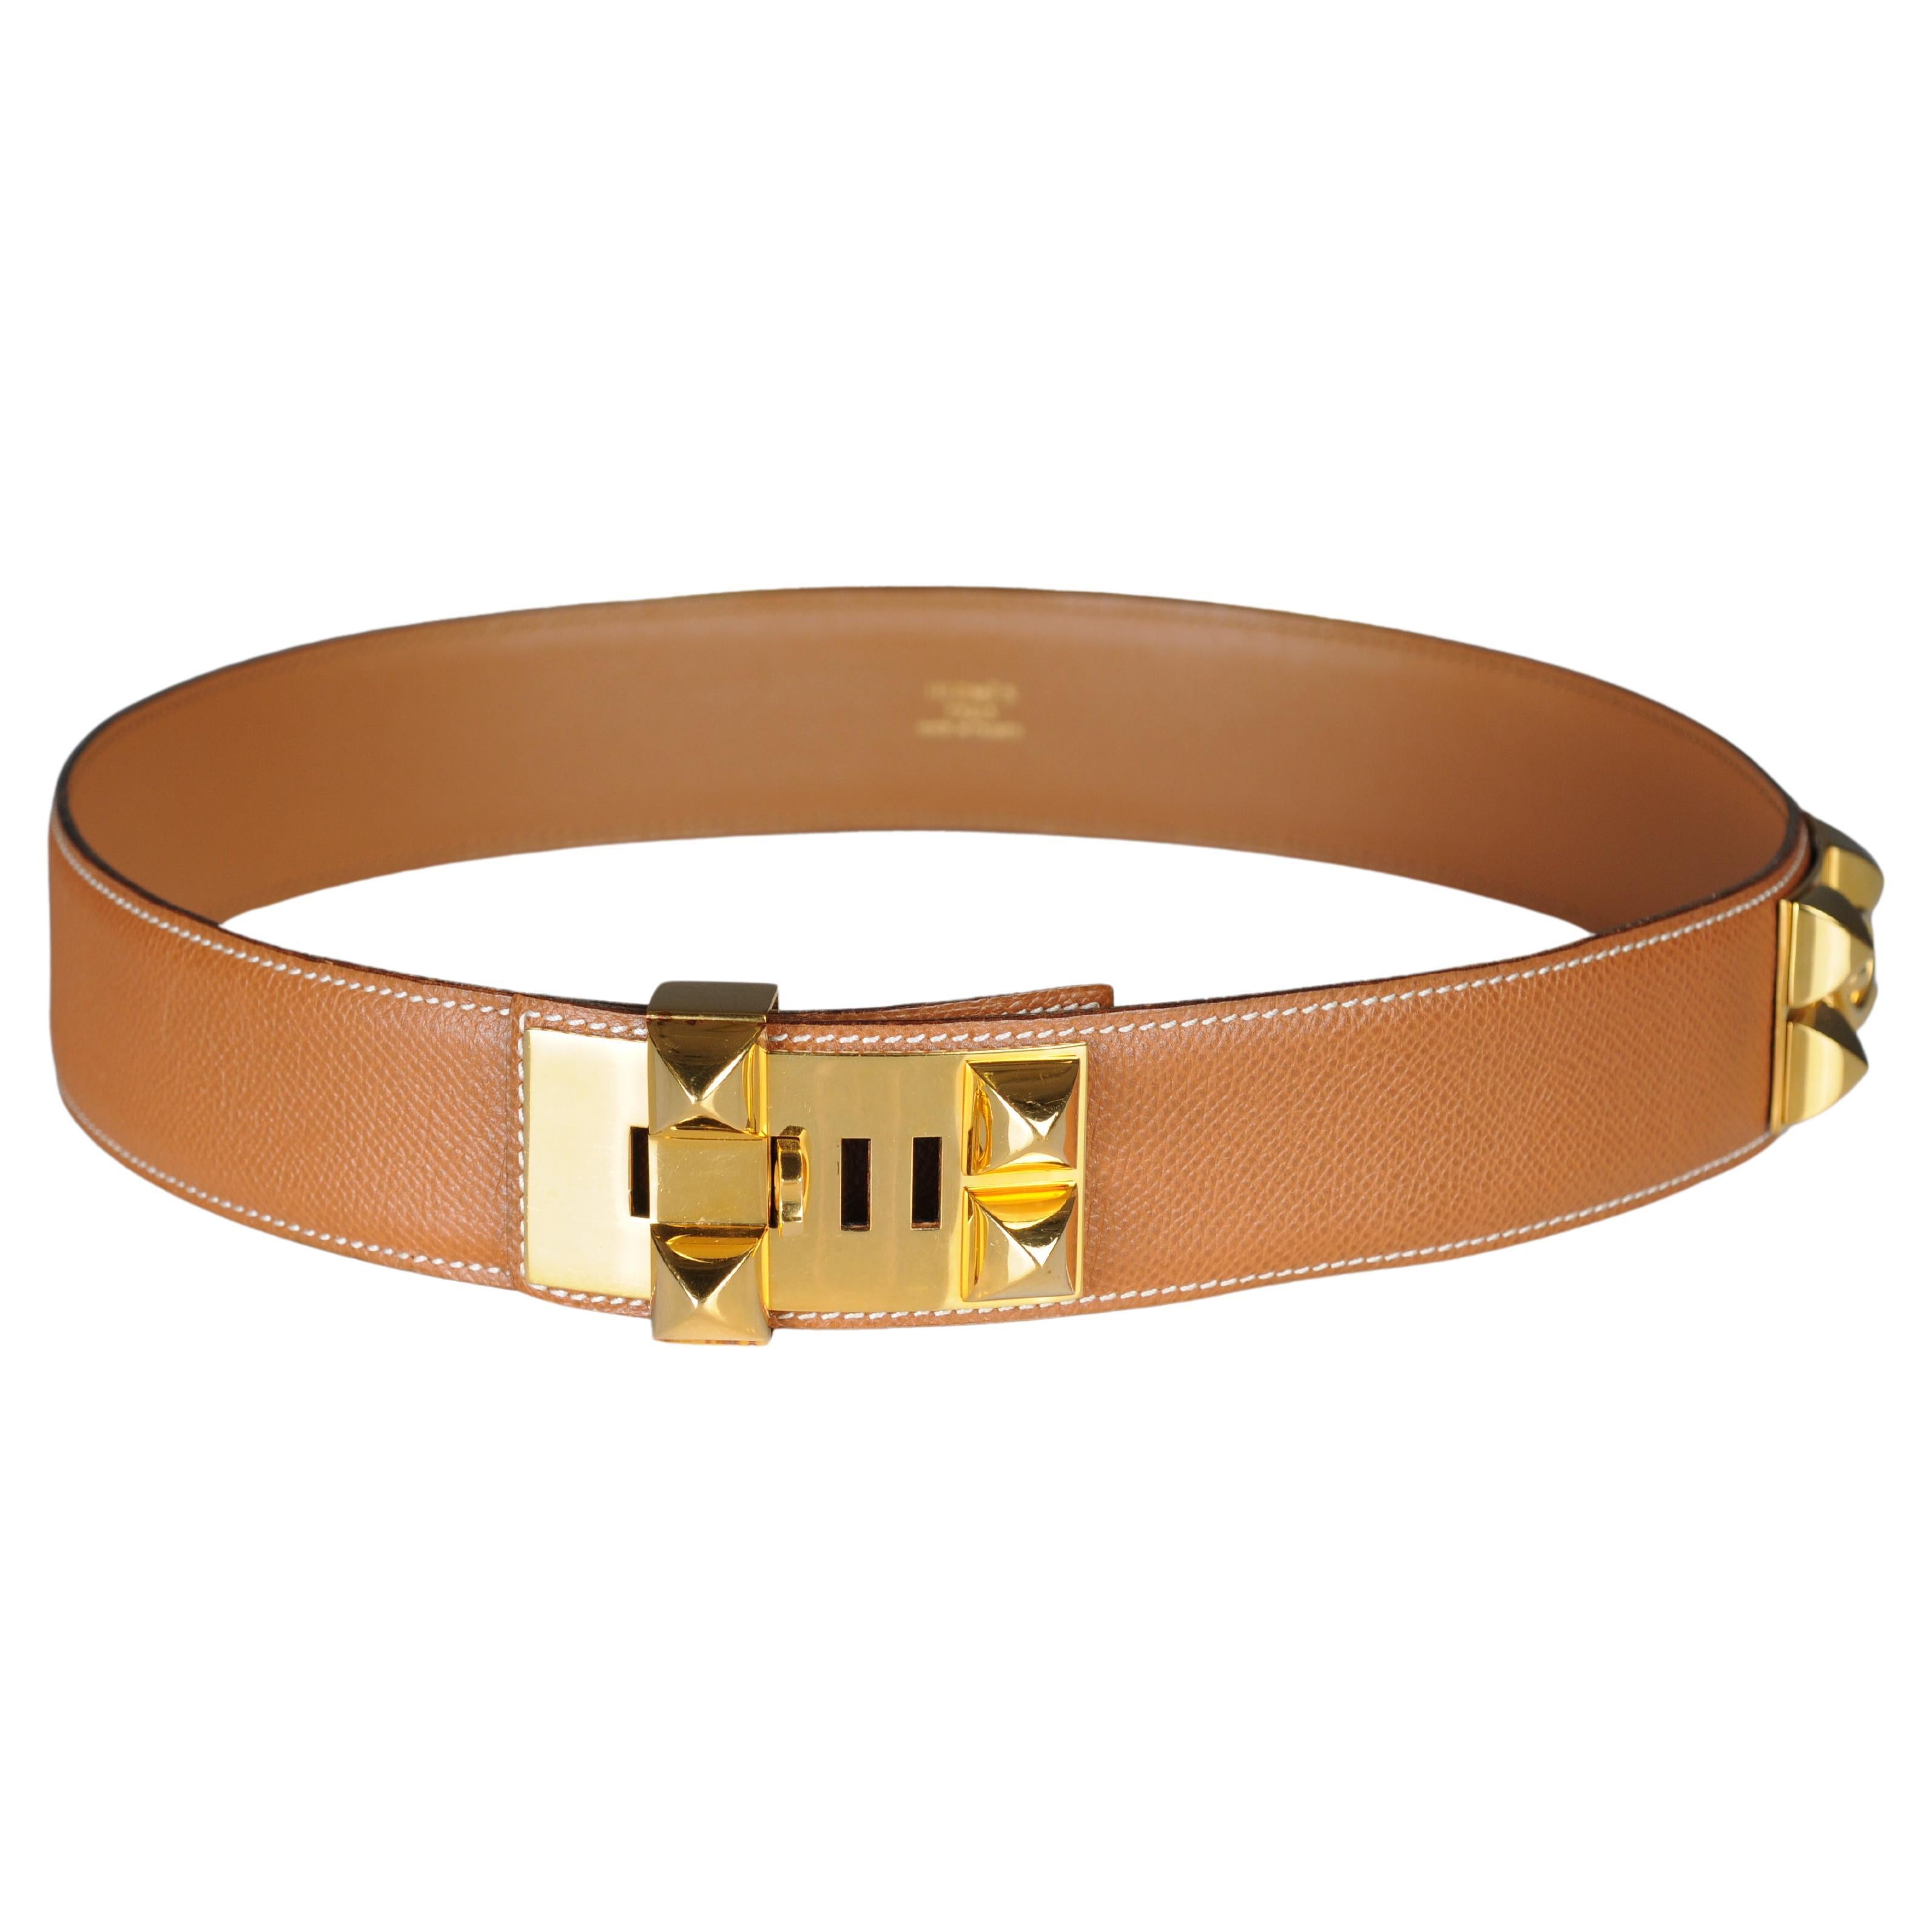 Hermes Collier de chien leather belt brown gold  For Sale